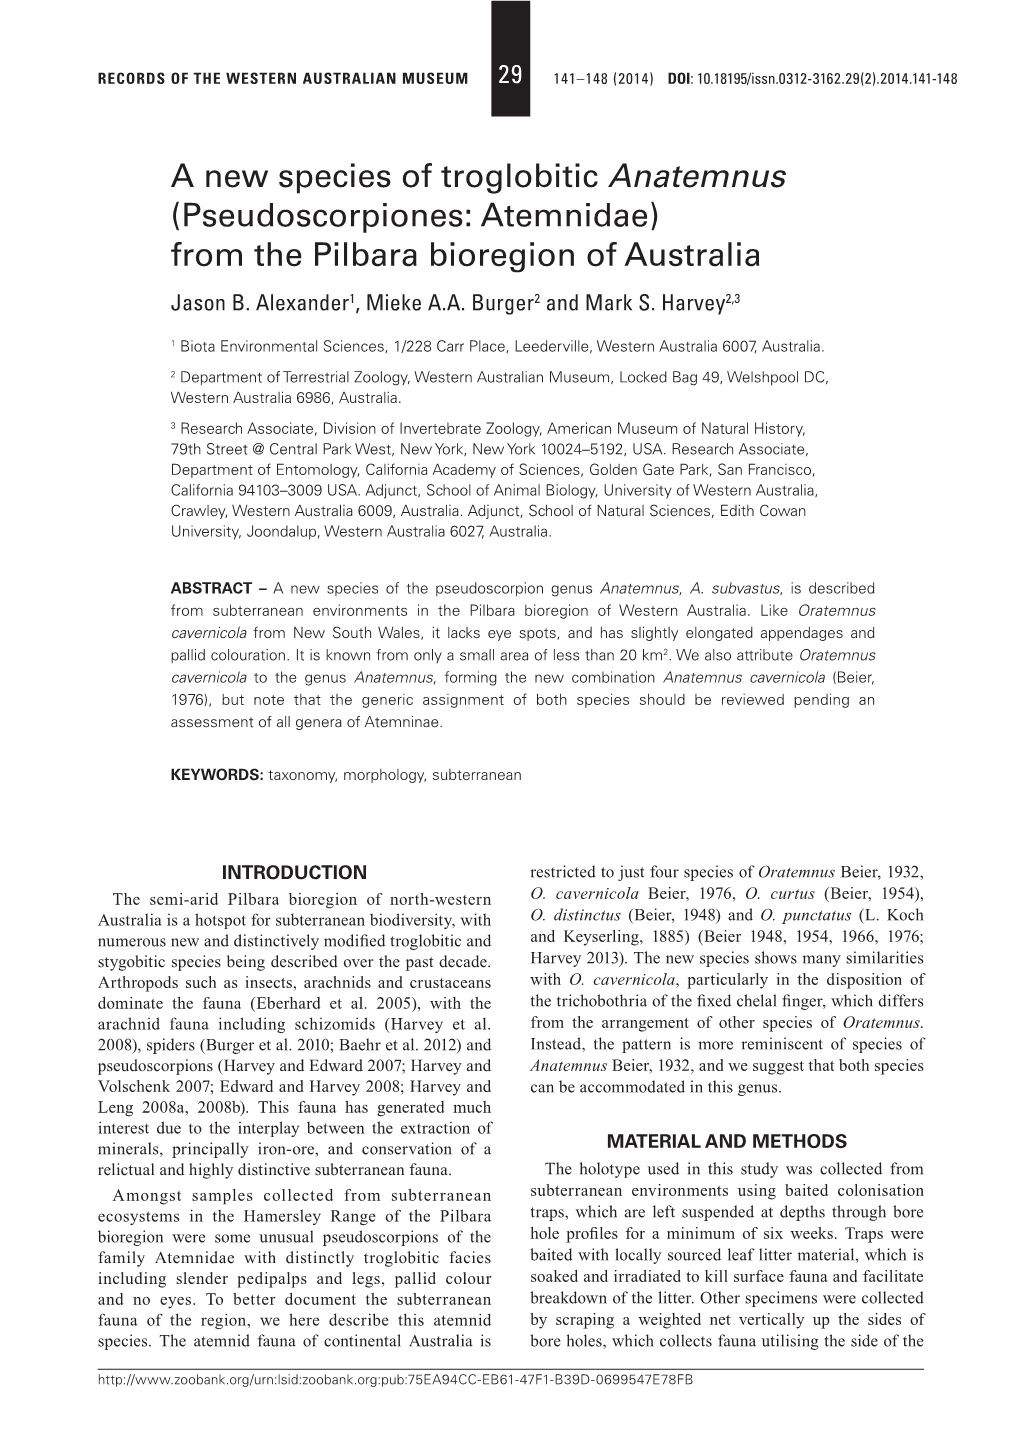 A New Species of Troglobitic Anatemnus (Pseudoscorpiones: Atemnidae) from the Pilbara Bioregion of Australia Jason B